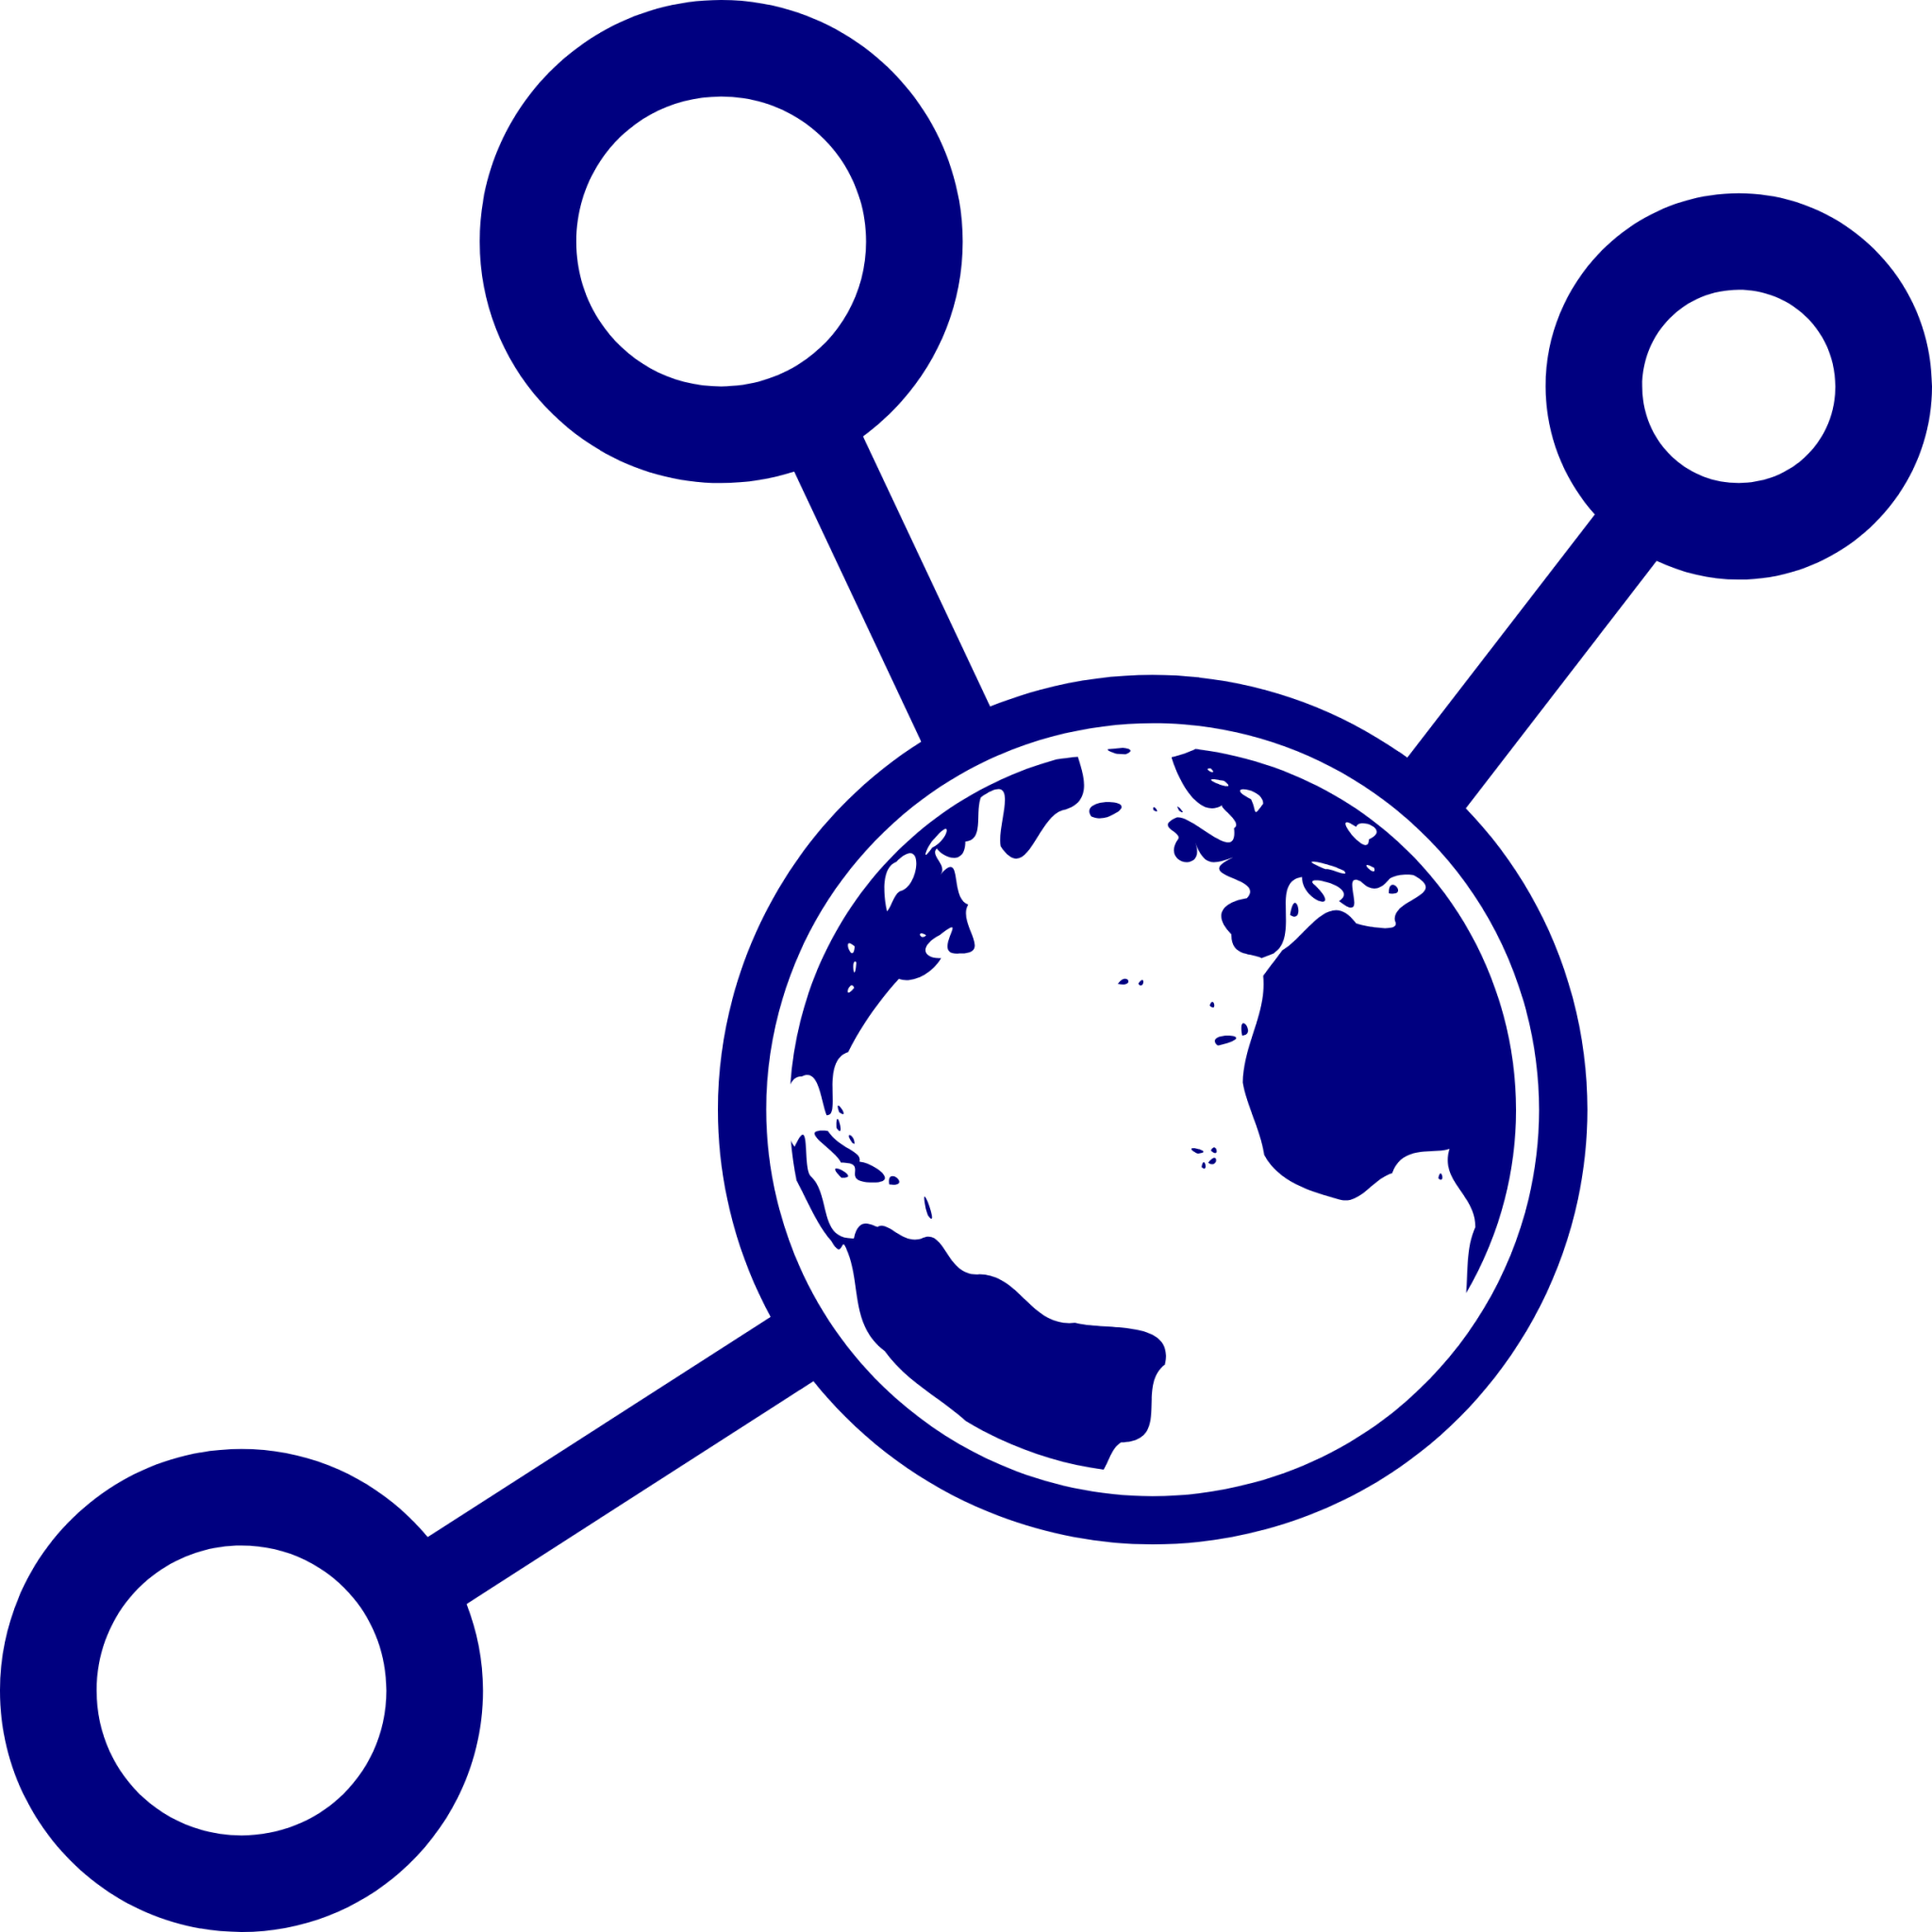 earth network icon